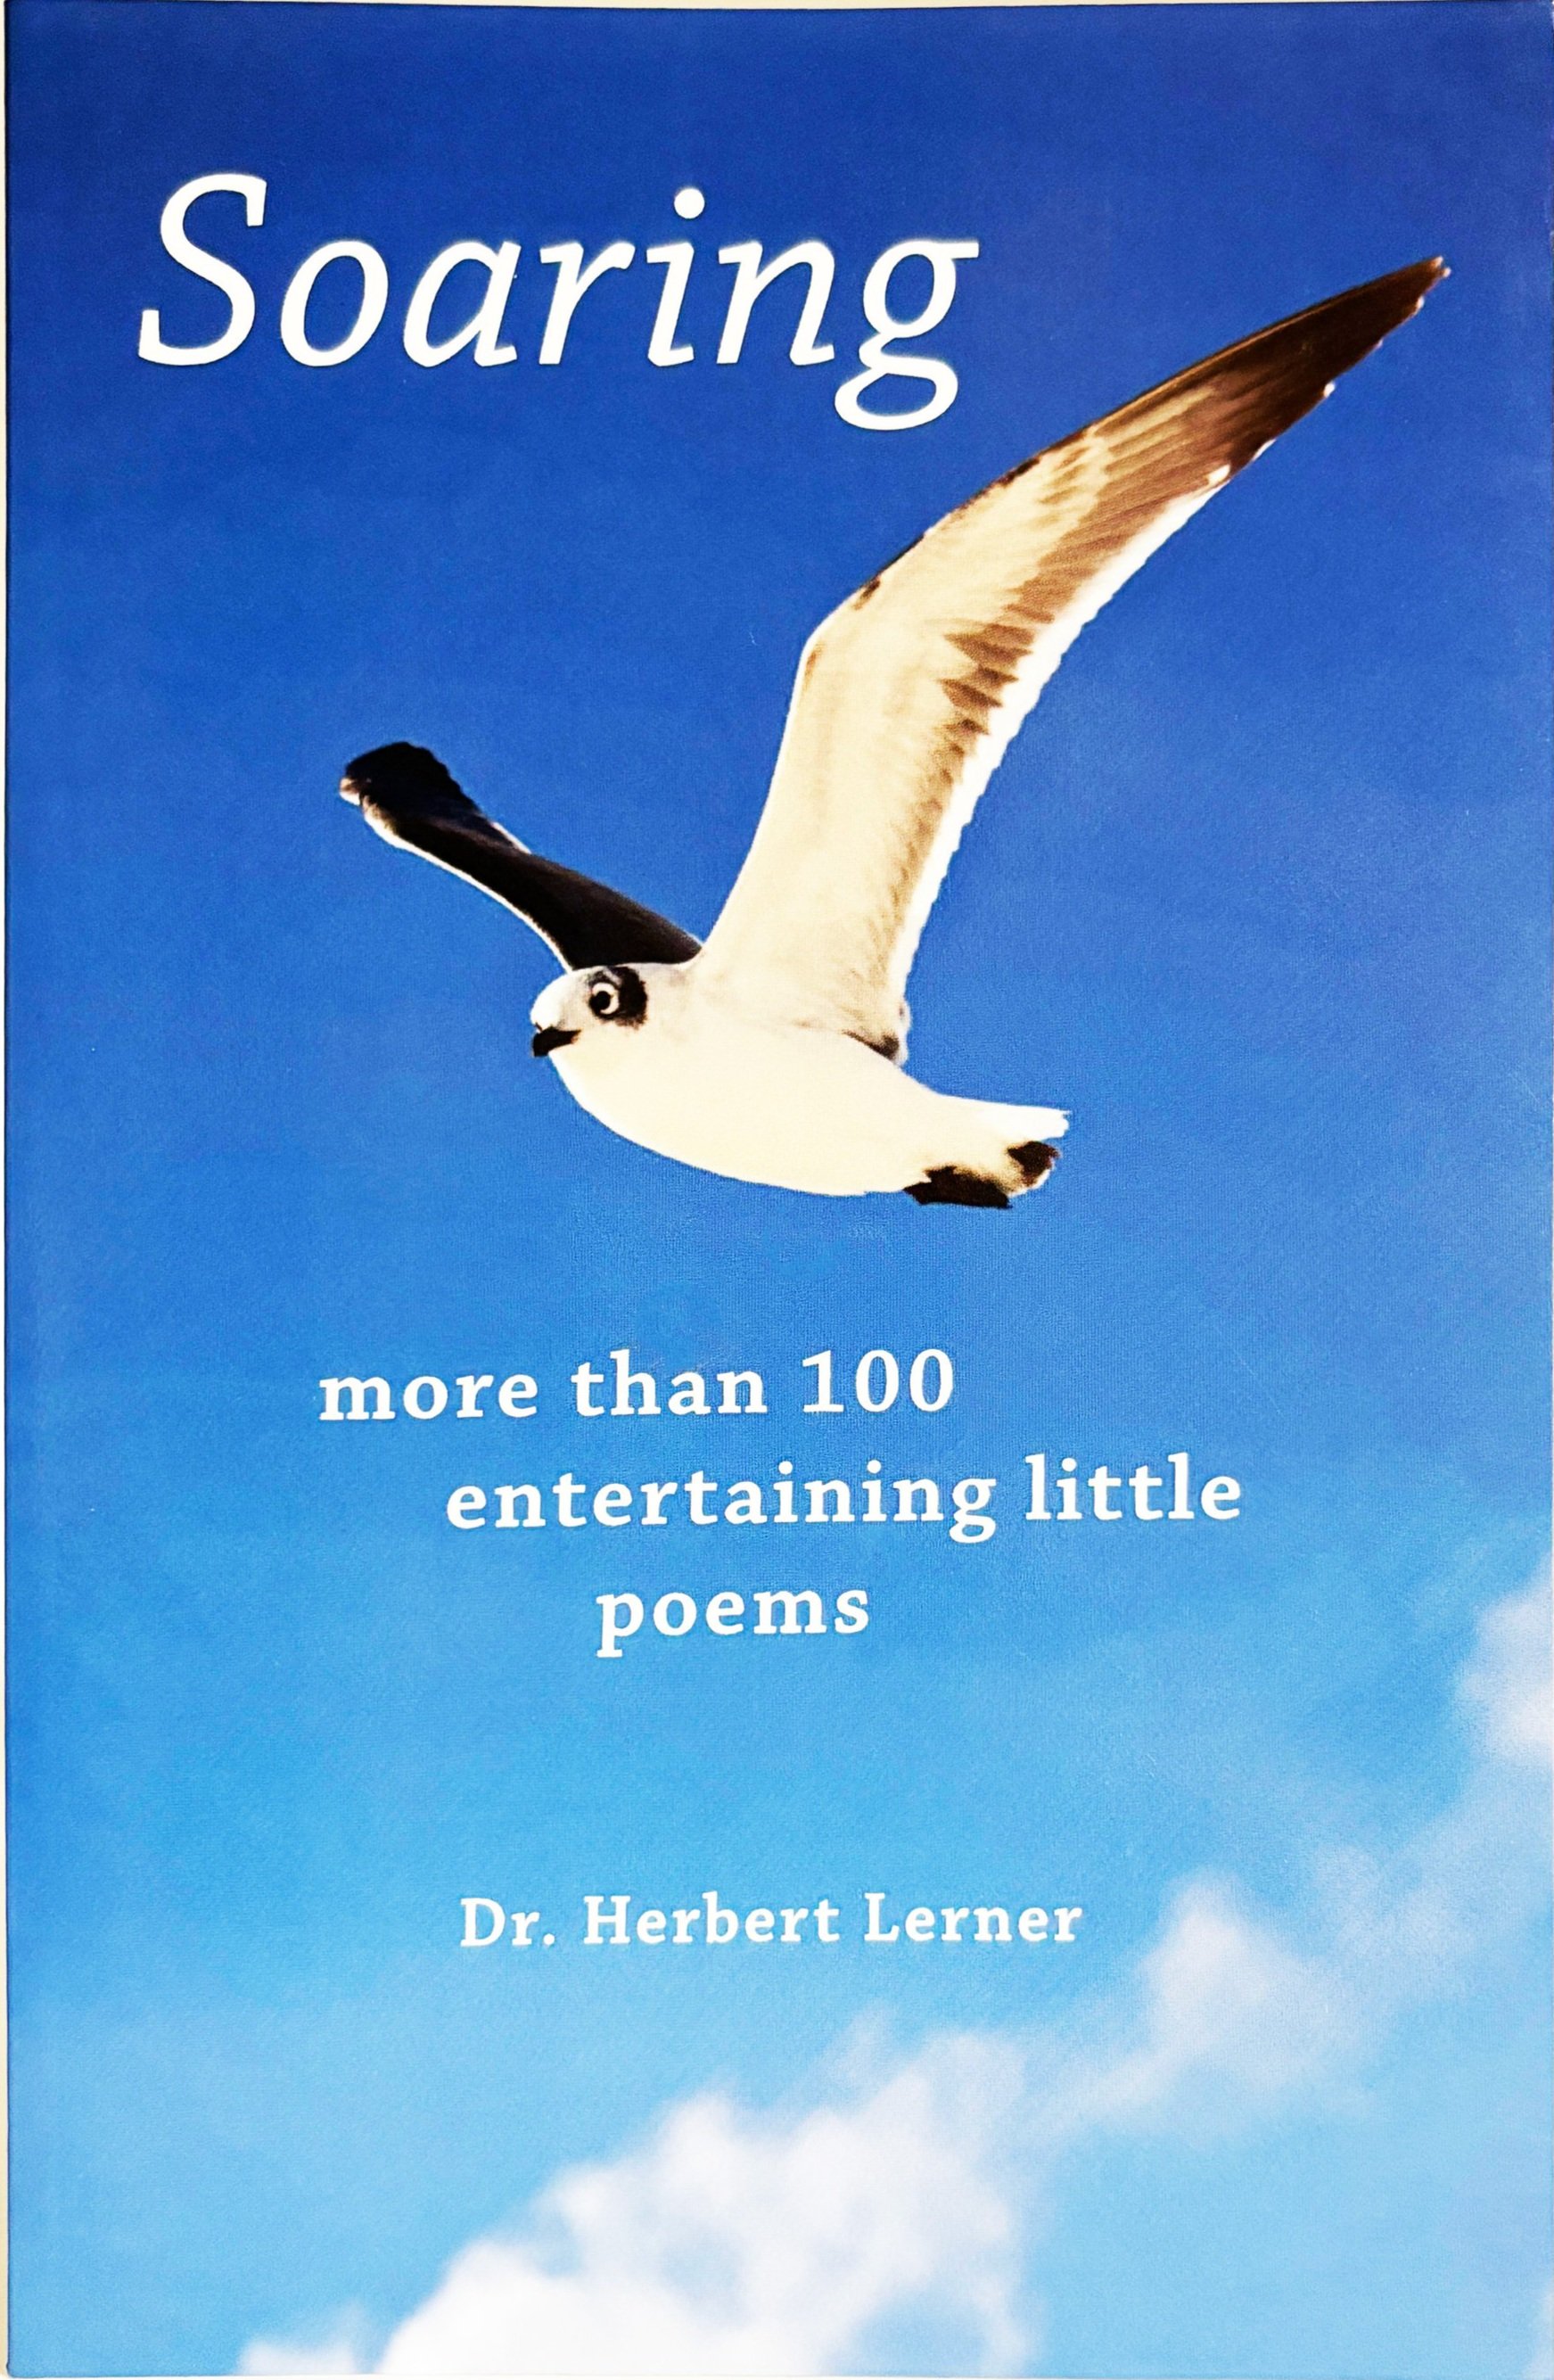 Soaring, more than 100 entertaining little poems (2011)